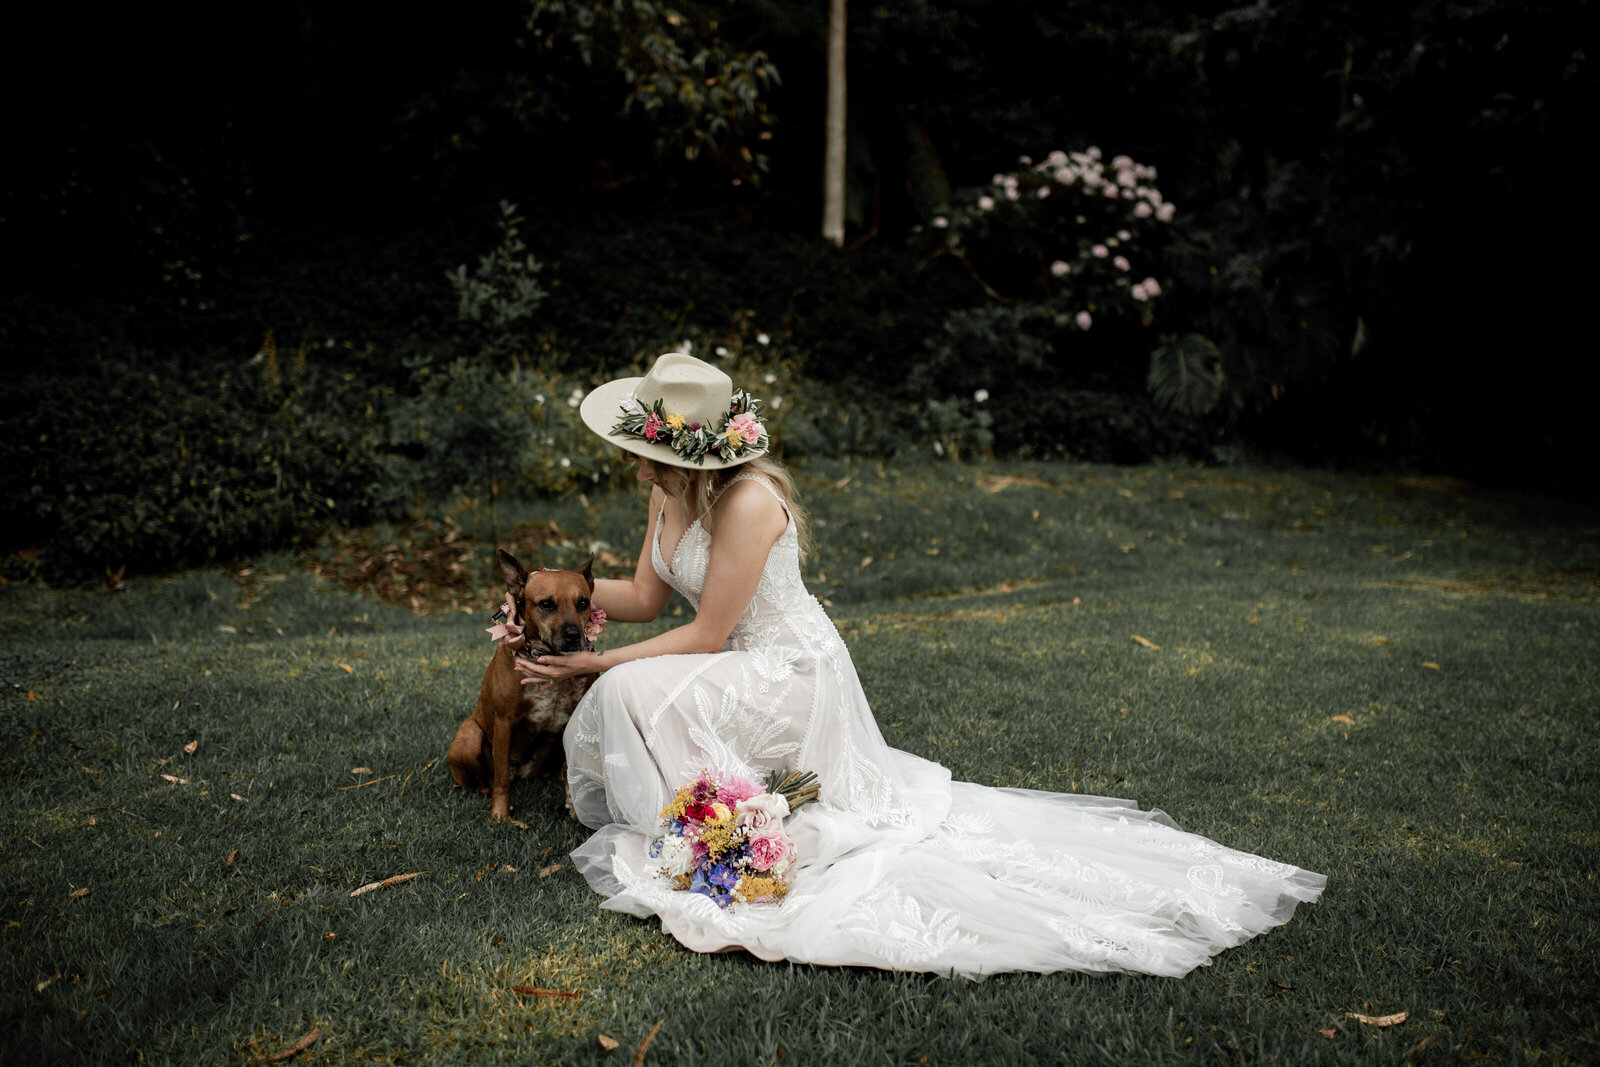 Terri-lee-Salvatore-Rexvil-Photography-Adelaide-Wedding-Photographer-414